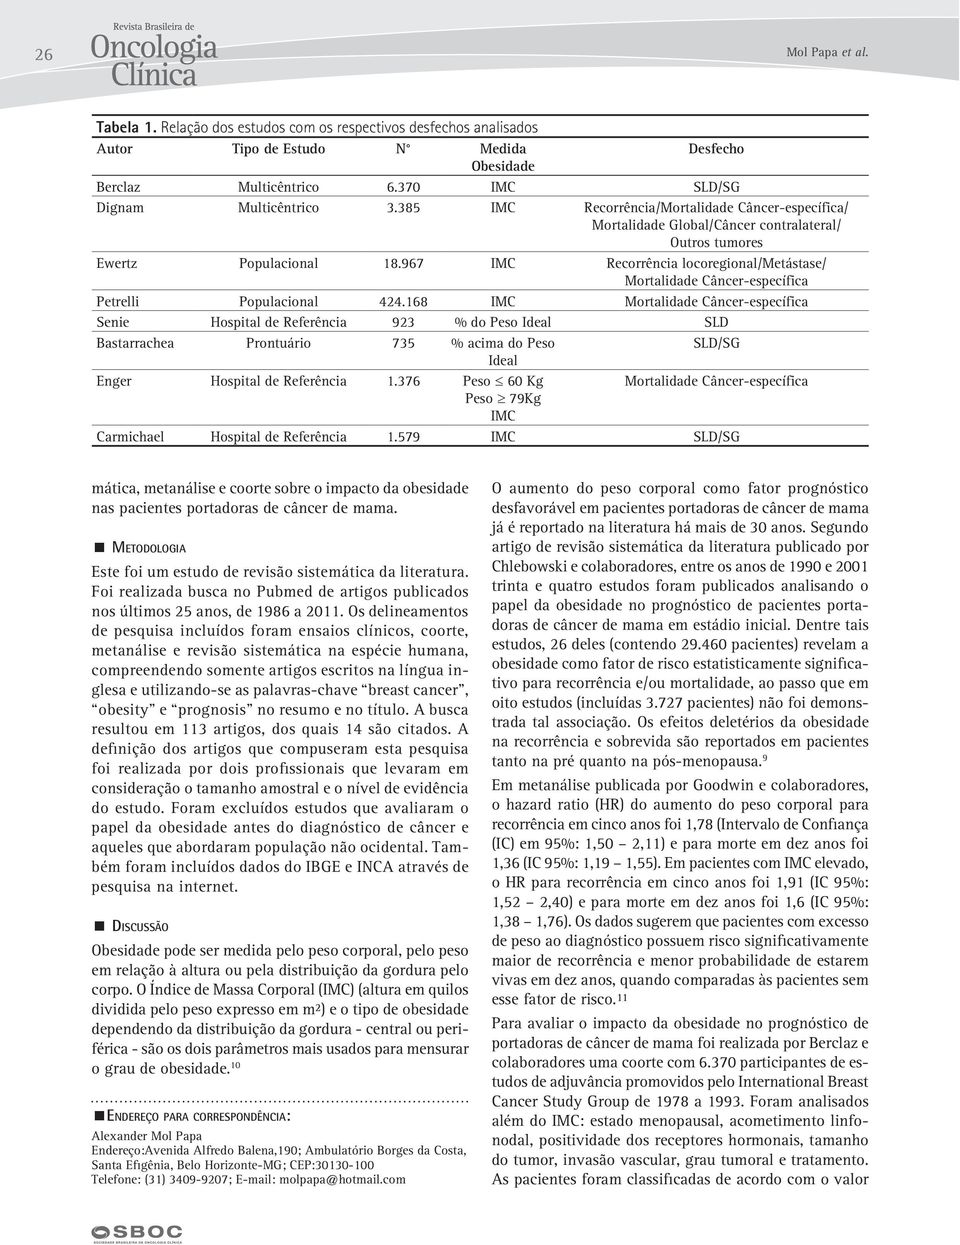 967 IMC Recorrência locoregional/metástase/ Mortalidade Câncer-específica Petrelli Populacional 424.